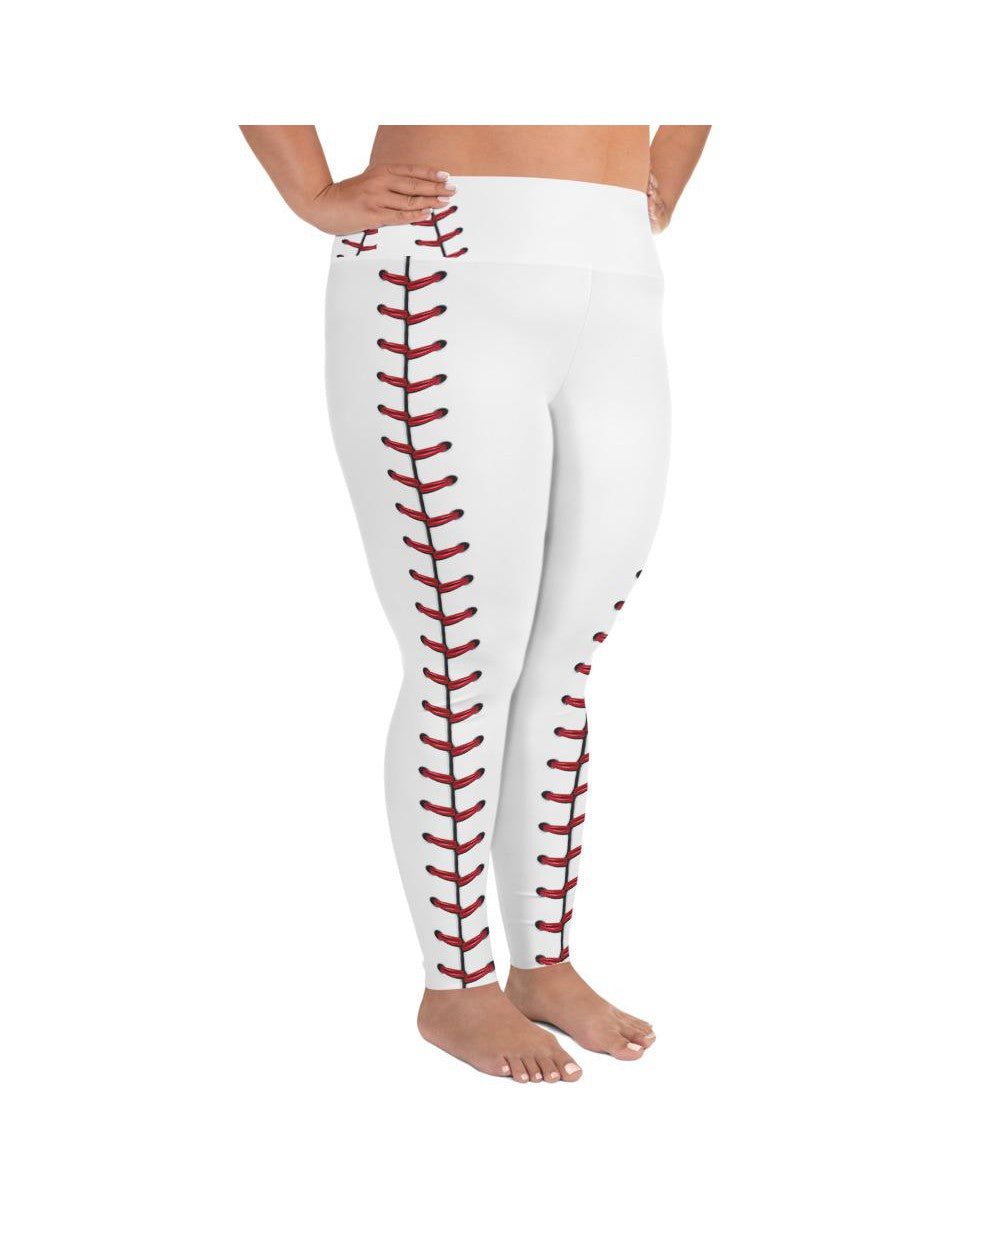 Baseball Stitches Plus Size Leggings